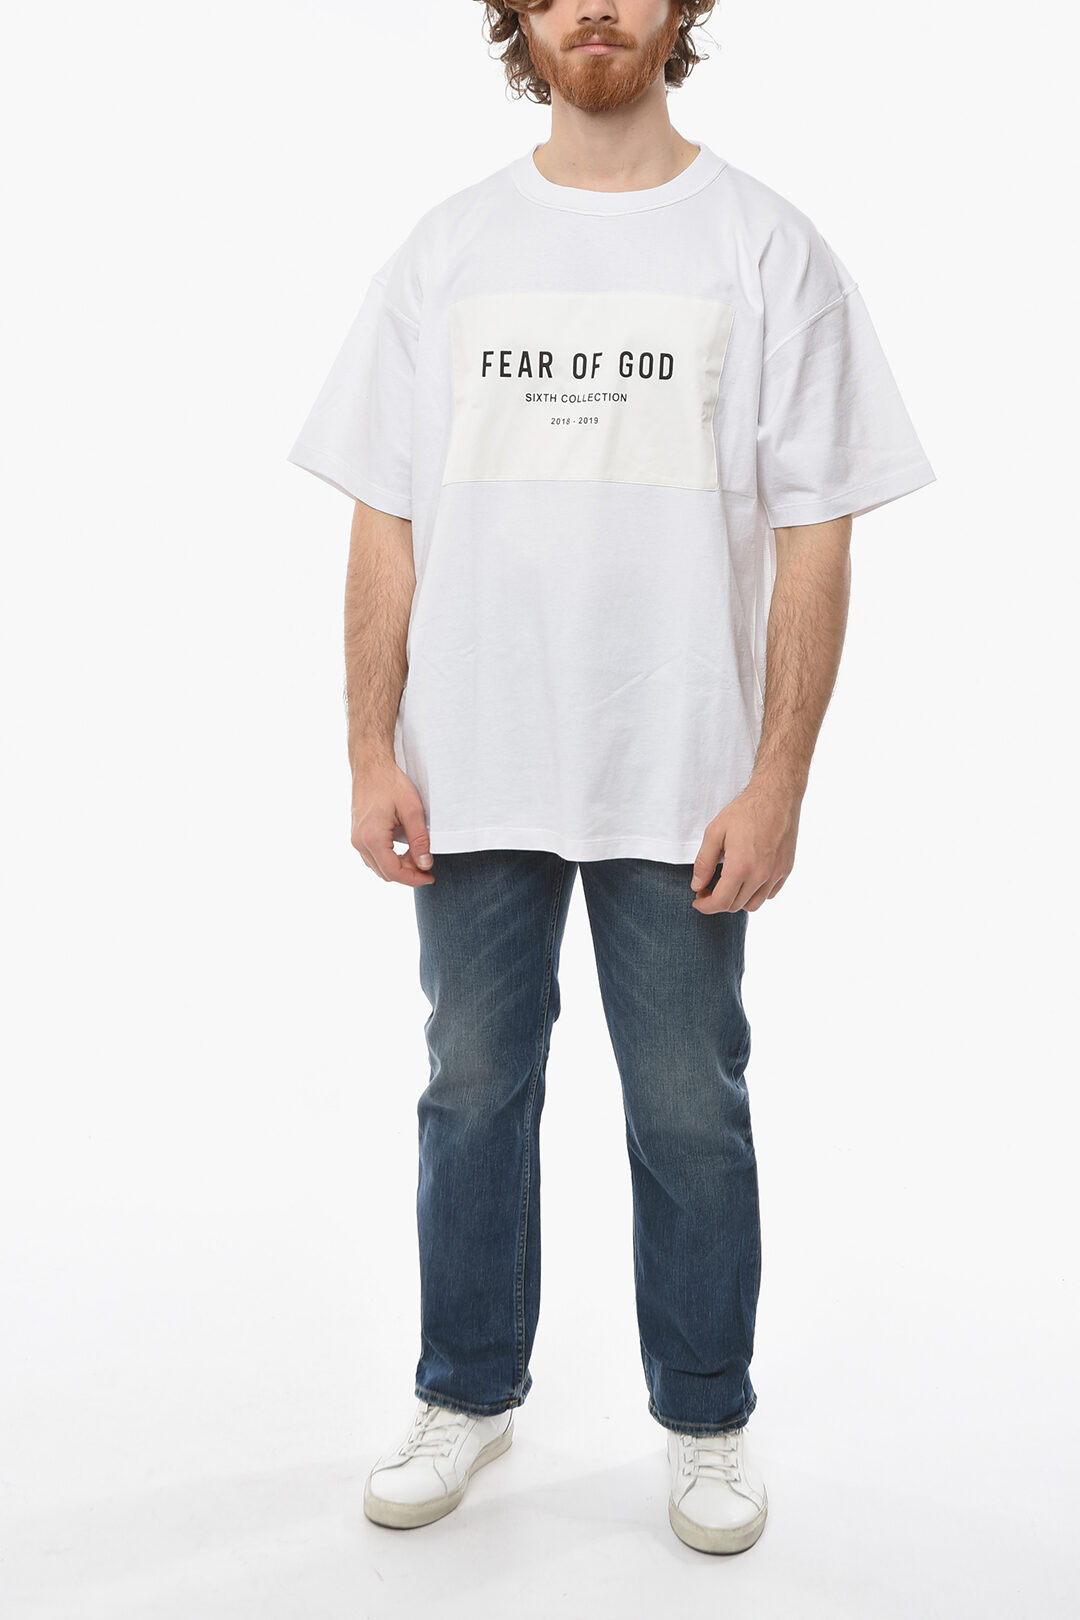 mens fear of god t shirt